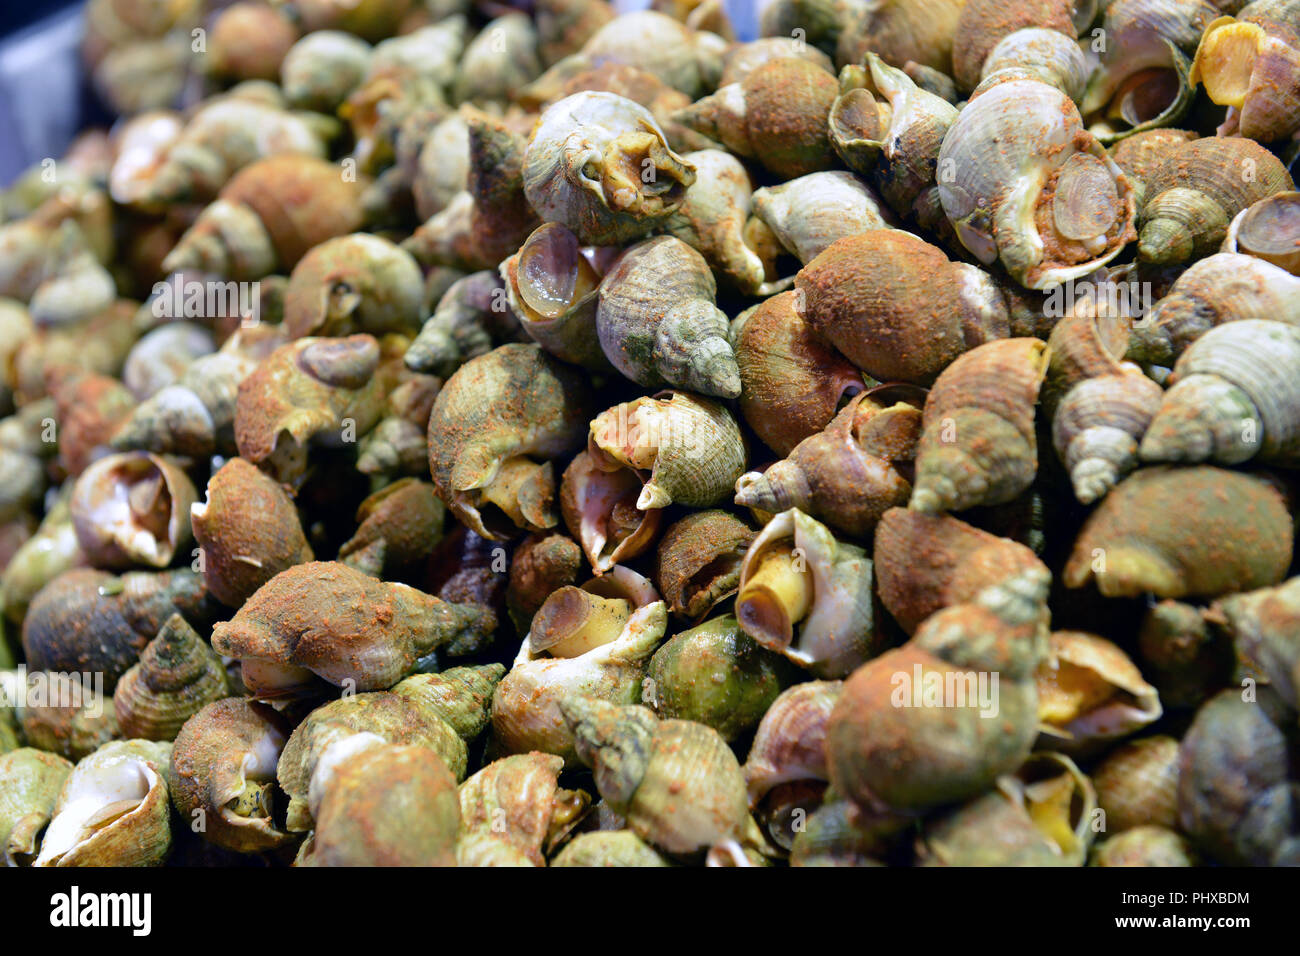 Sea snails on a market show-window Stock Photo